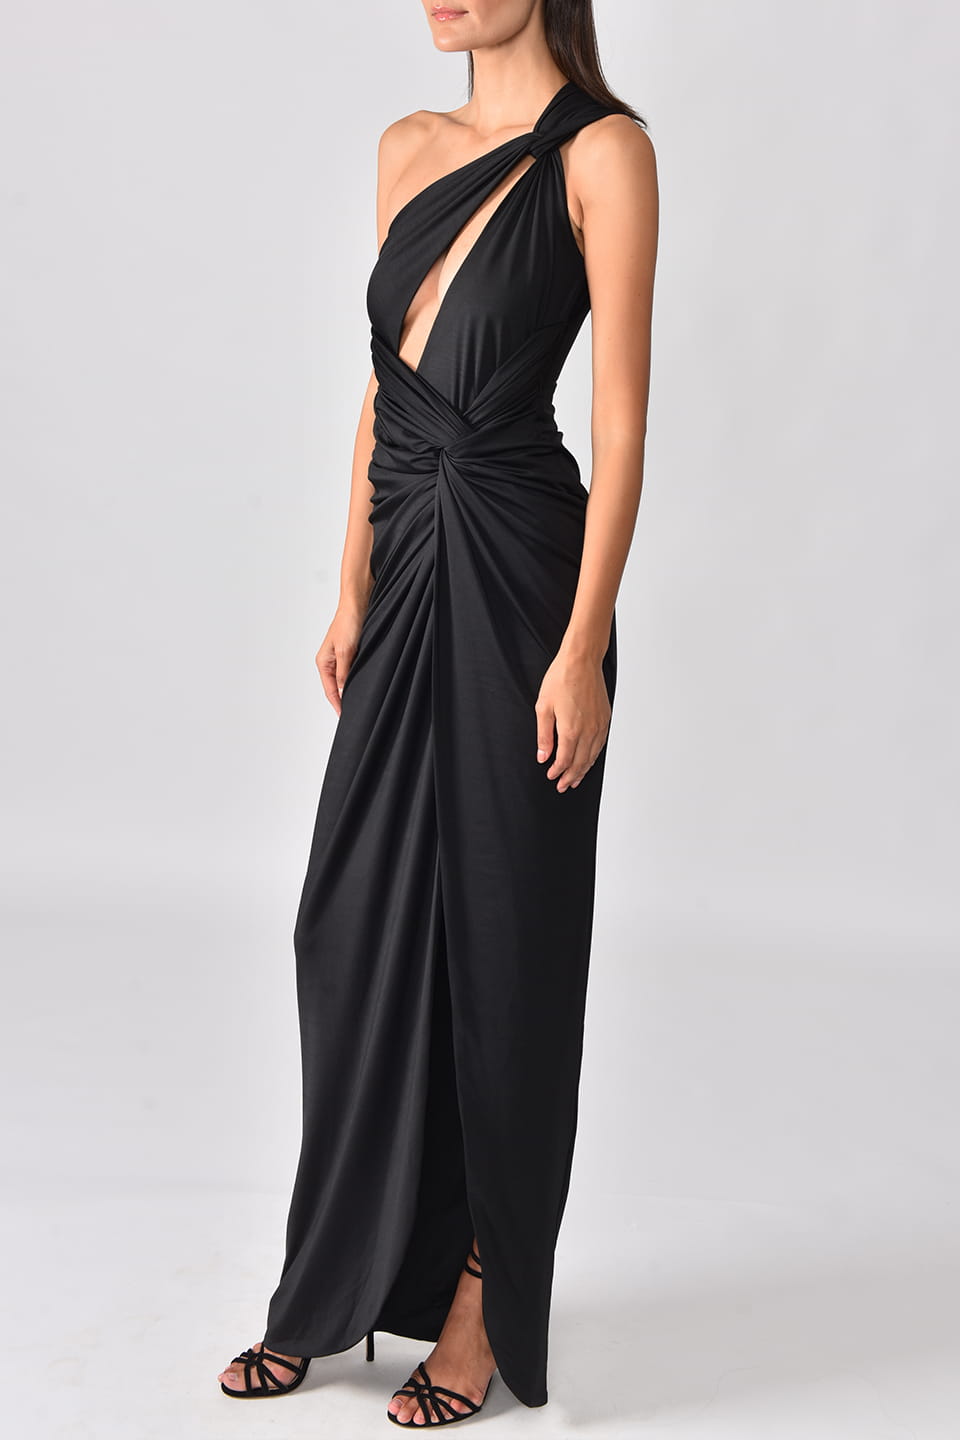 Thumbnail for Product gallery 3, Model wearing black one shoulder dress with long side slit from Hamel fashion designer, posing on left side